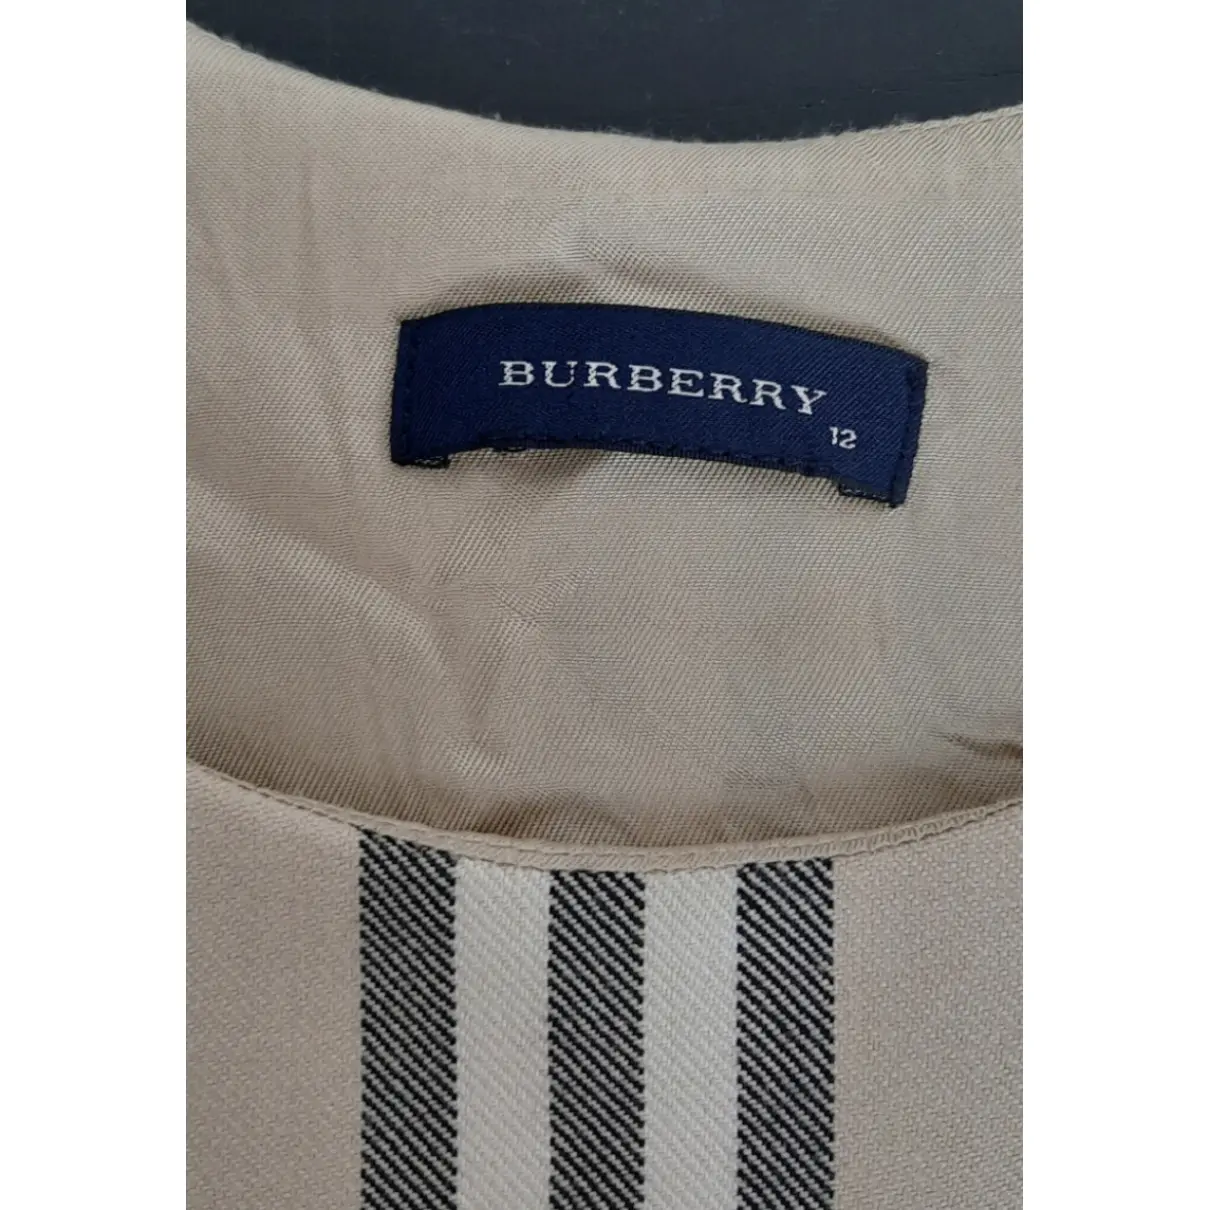 Buy Burberry Wool dress online